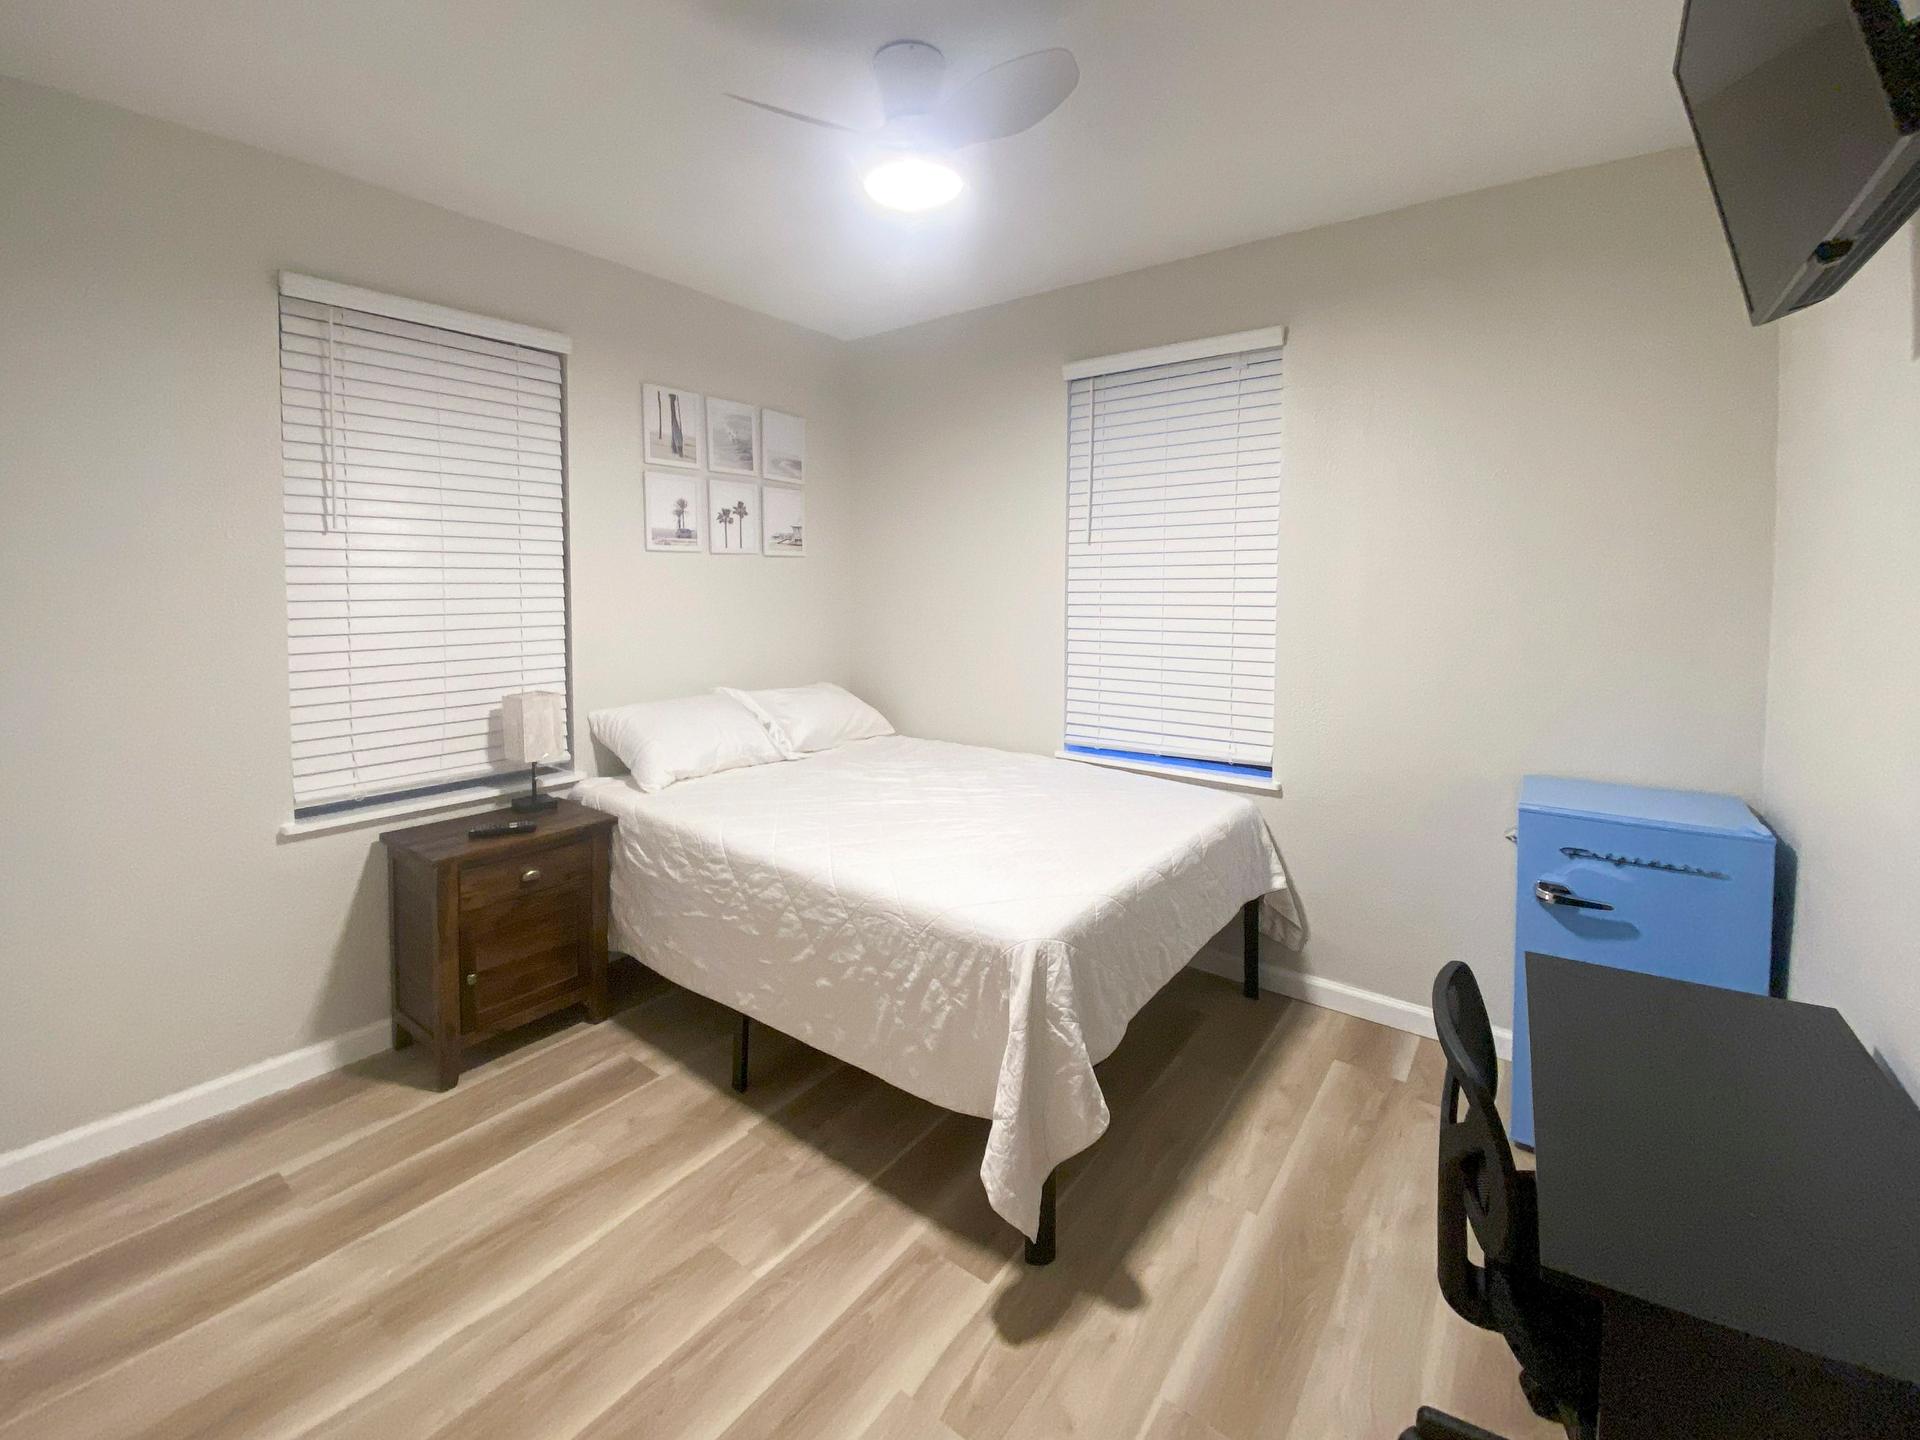 bedroom, detected:window blind, bed, ceiling fan